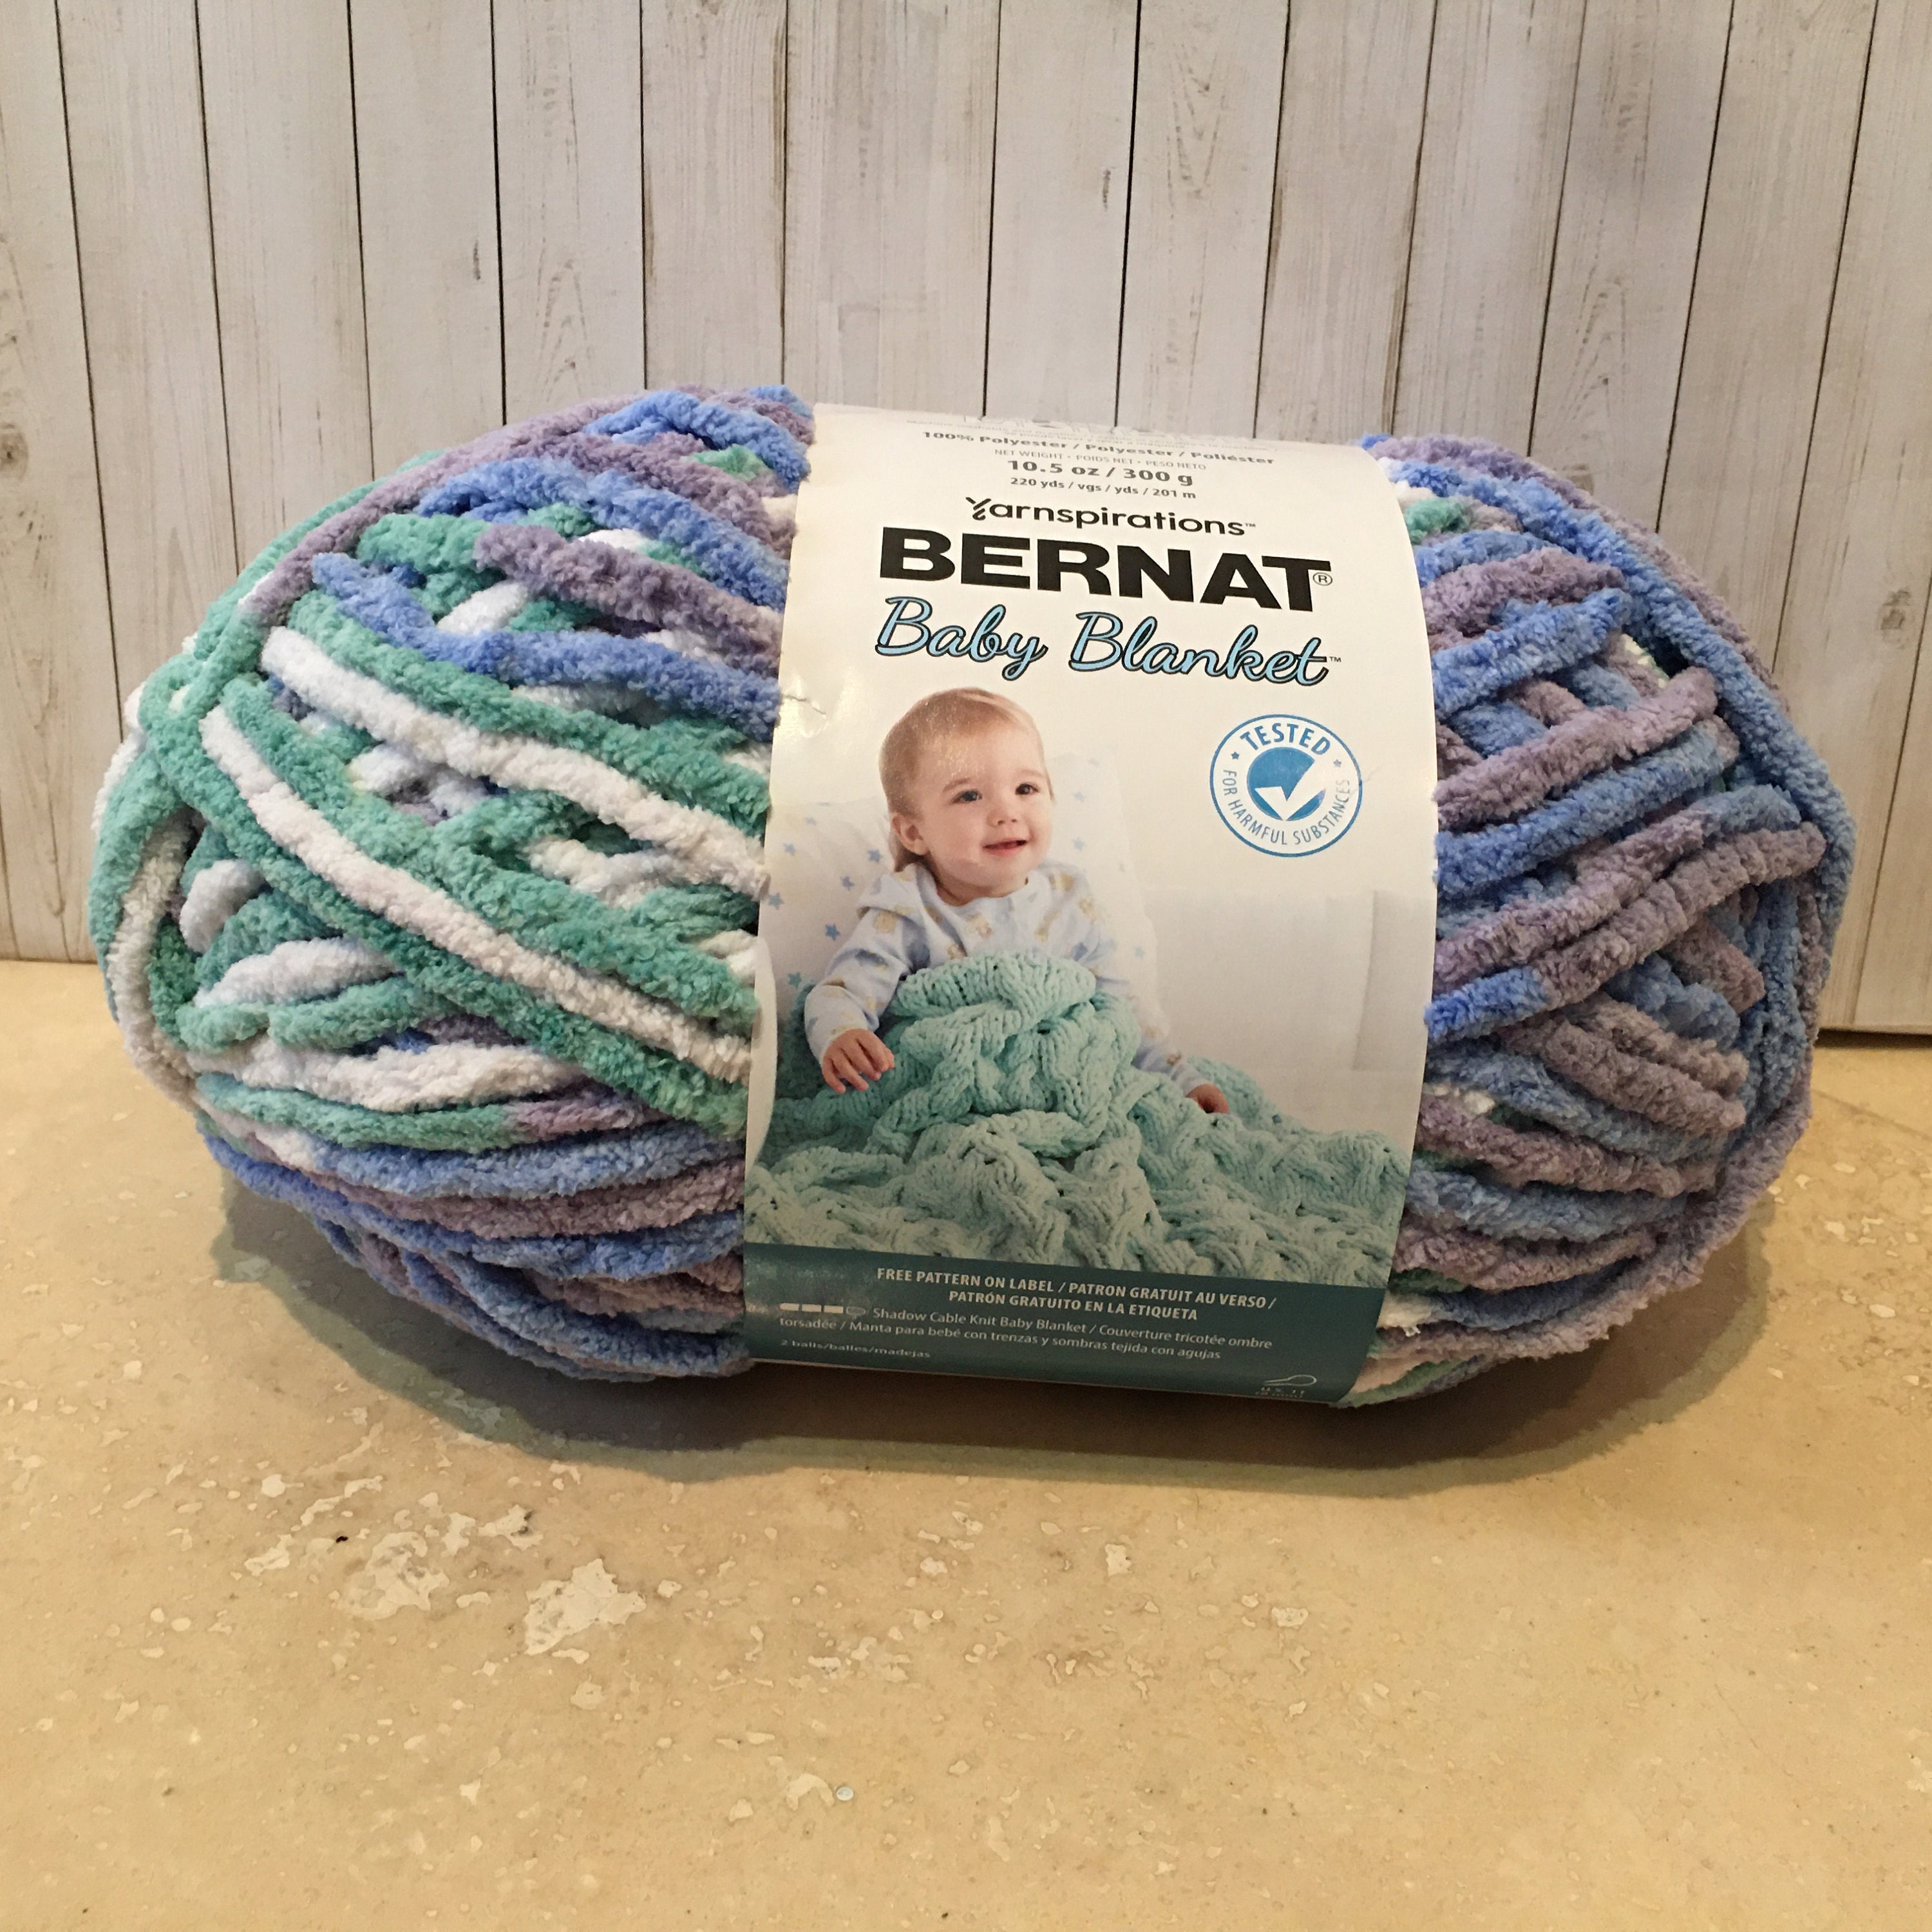 Bernat Blanket Shadow Purple Yarn - 2 Pack of 300g/10.5oz - Polyester - 6 Super Bulky - 220 Yards - Knitting/Crochet